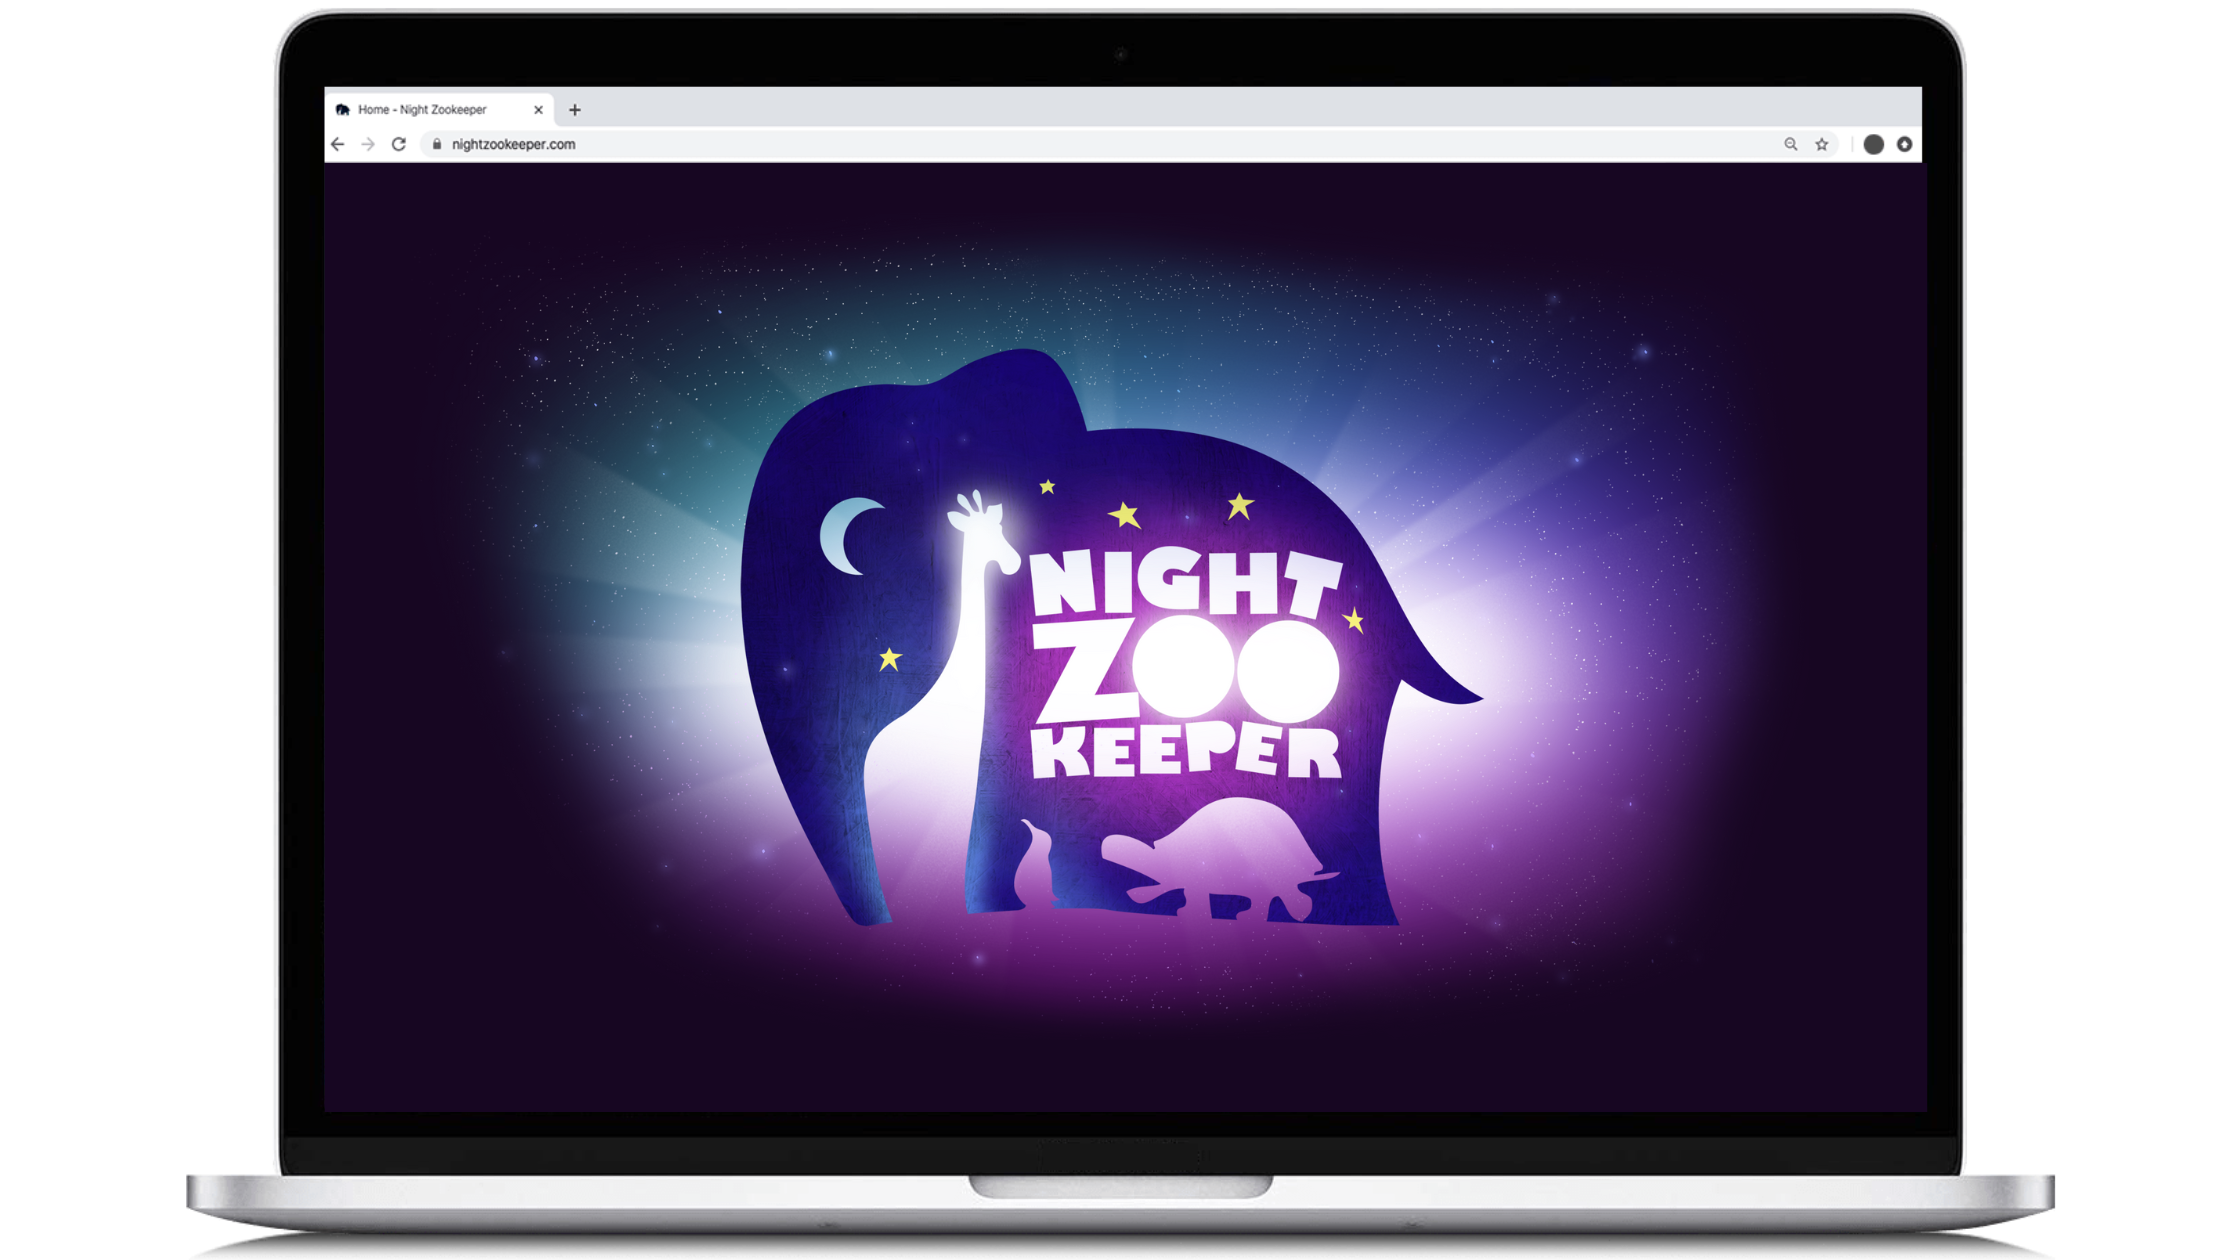 Night Zookeeper logo, presented on laptop screen.